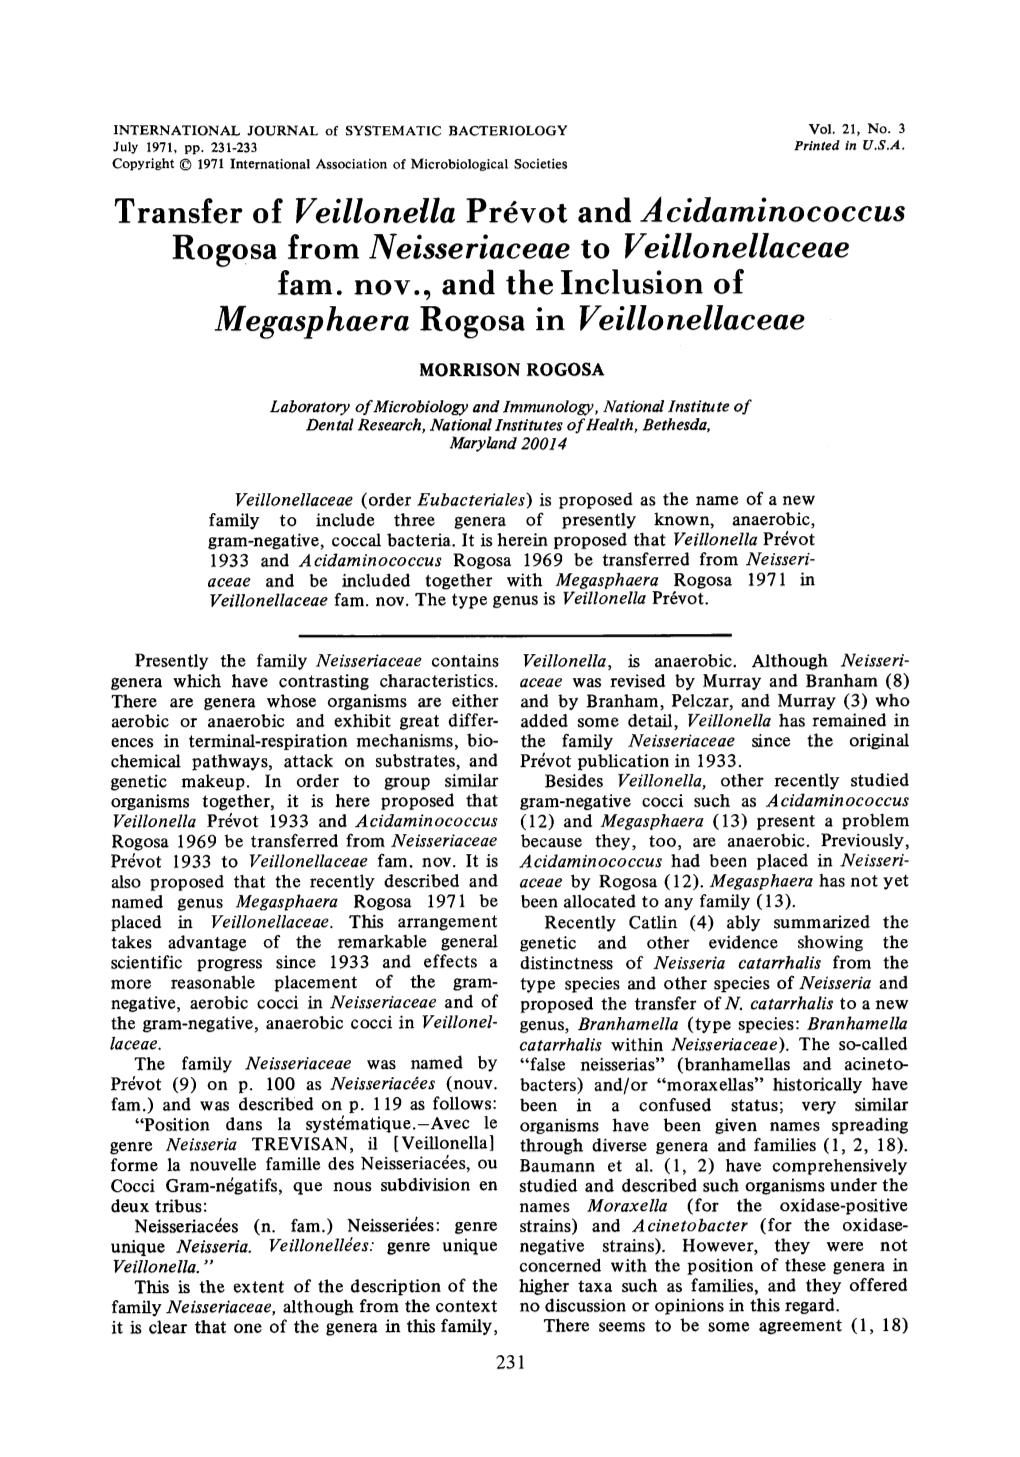 Transfer of Veillonella Prdvot and Acidaminococcus Rogosa from Neisseriaceae to Veillonellaceae Megasphaera Rogosa in Veillonell